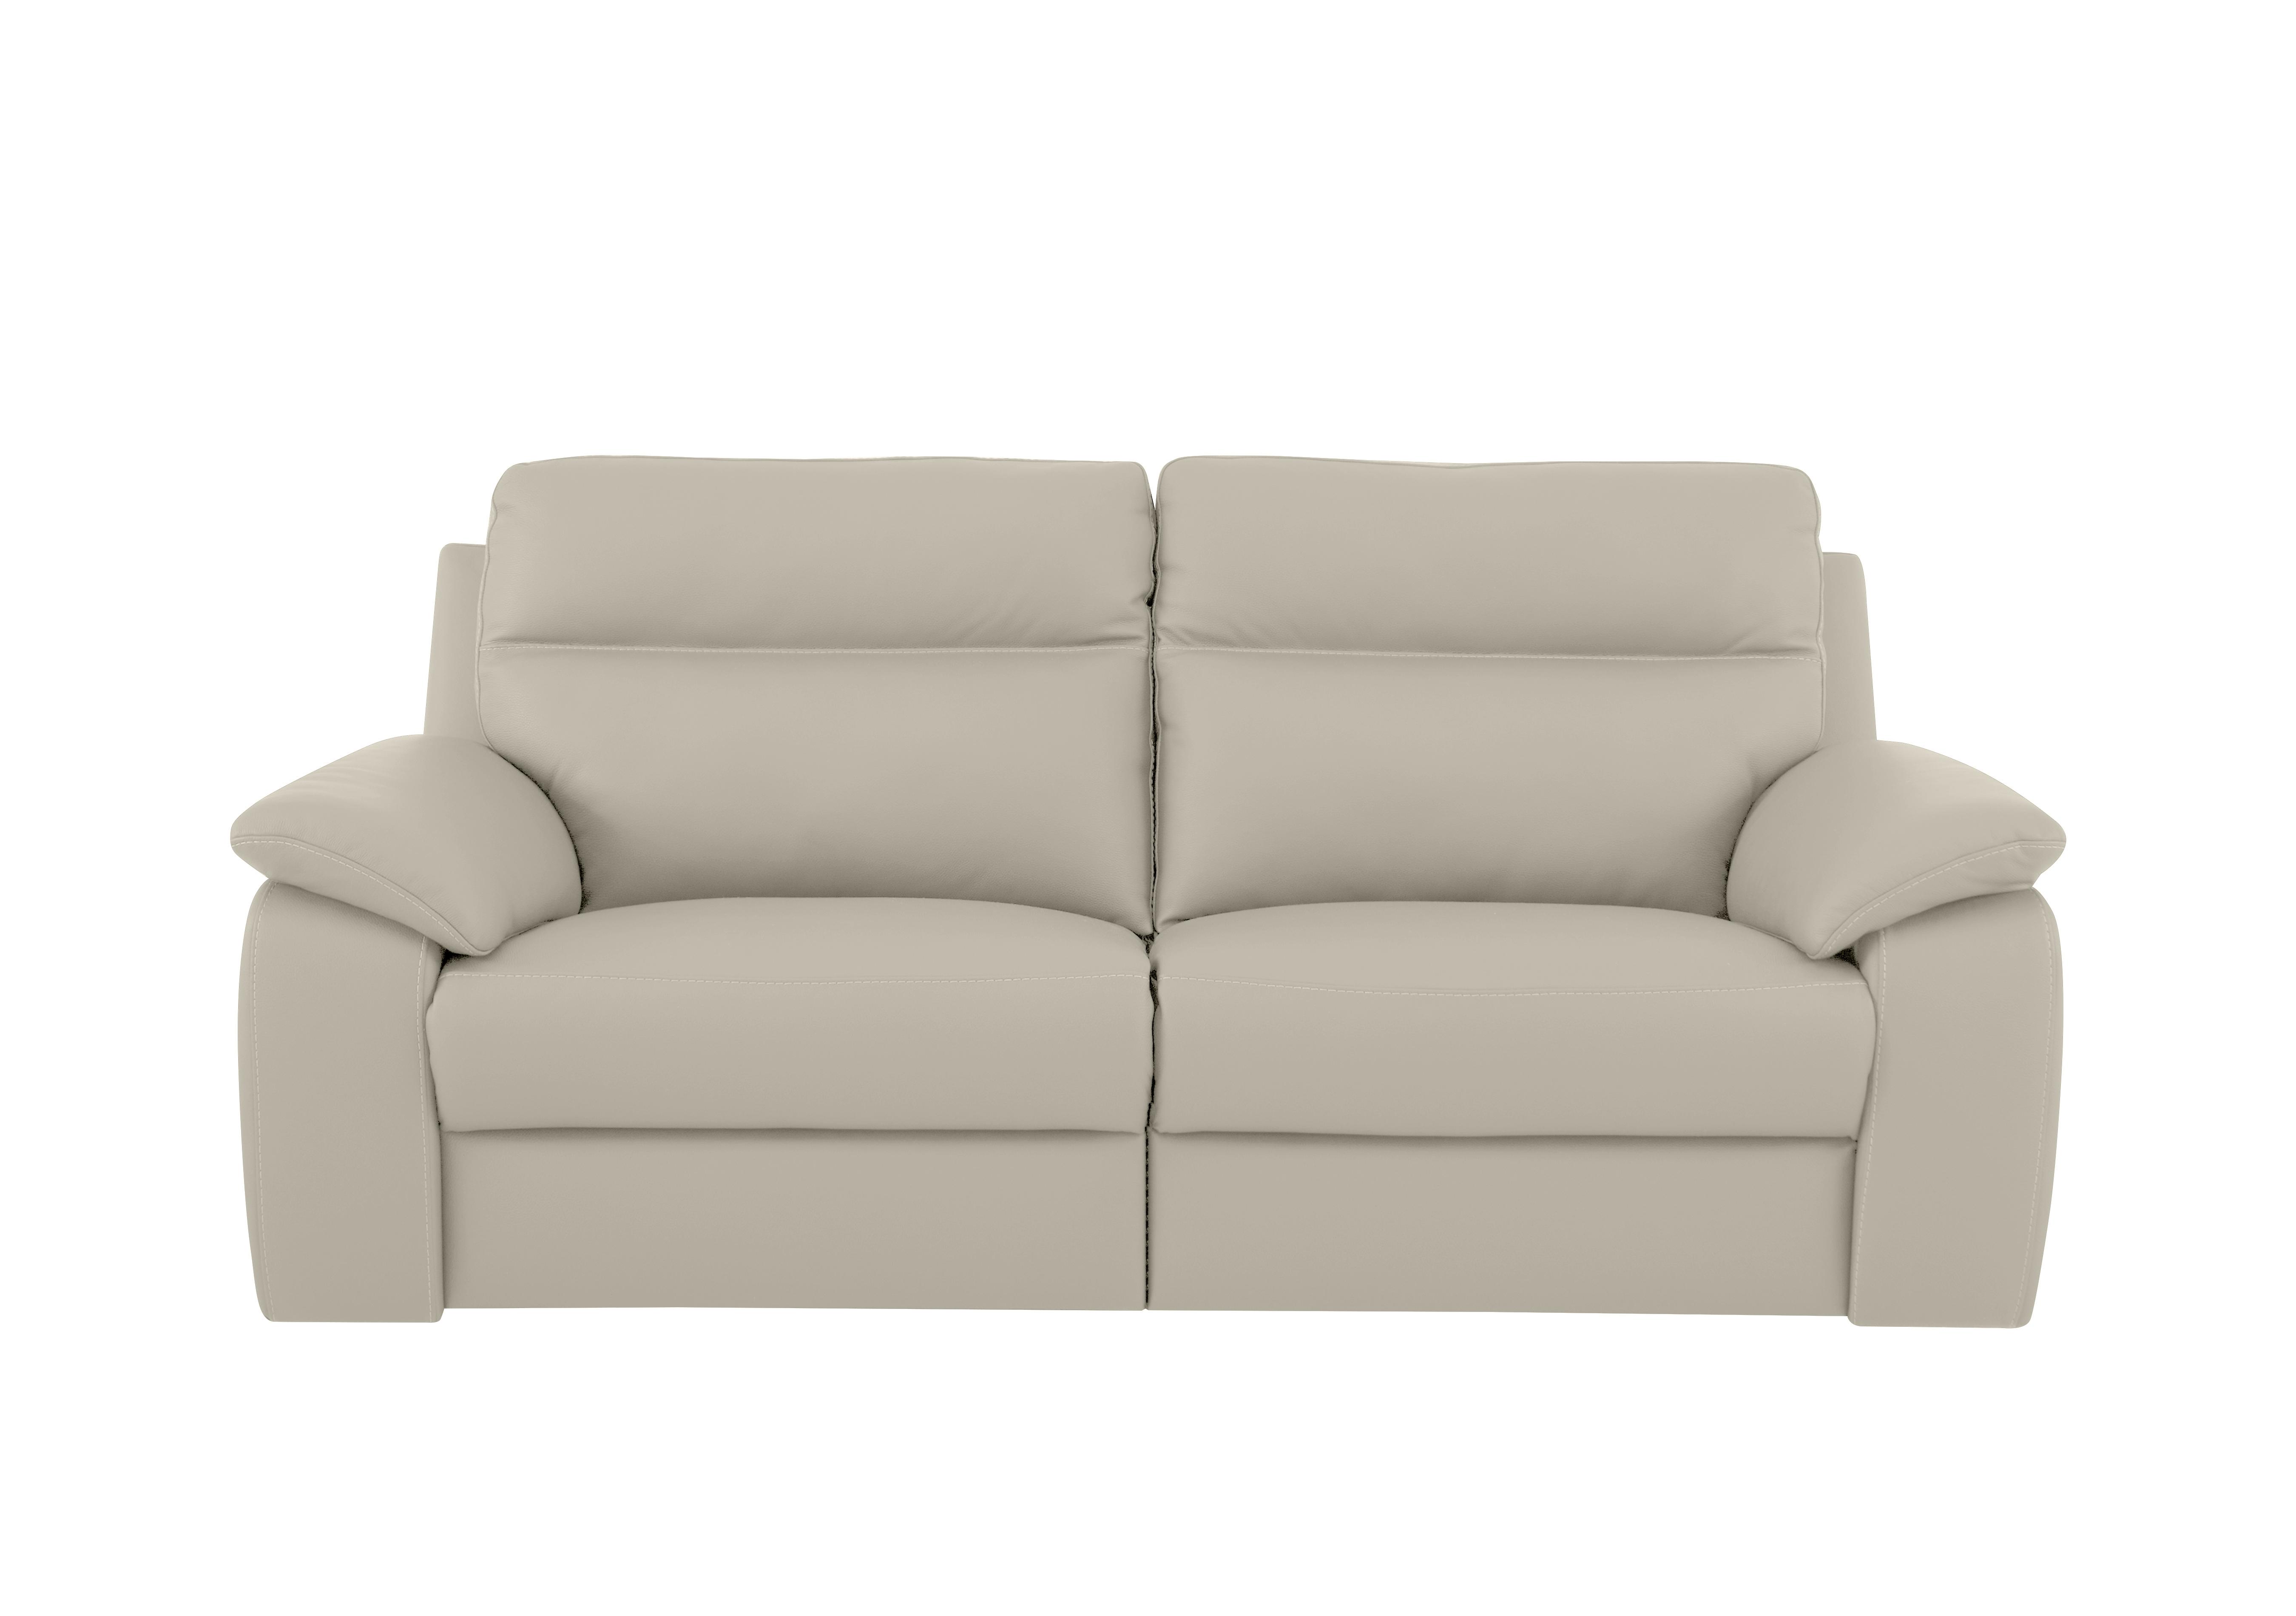 Pepino 3 Seater Leather Sofa in Torello 371 Ice on Furniture Village